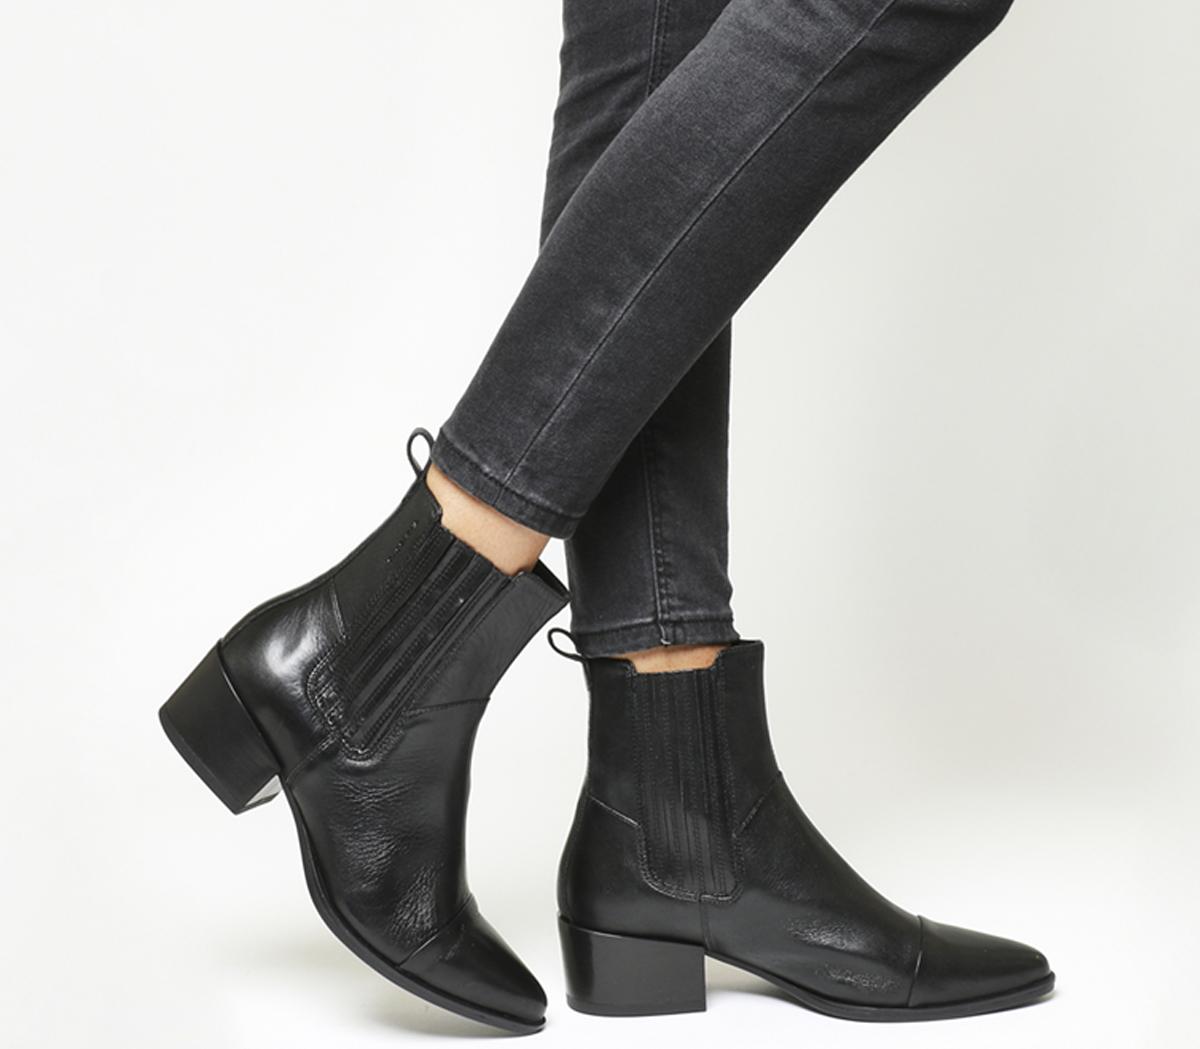 Vagabond Shoemakers Marja Chelsea Boots Black Leather Women's Ankle Boots